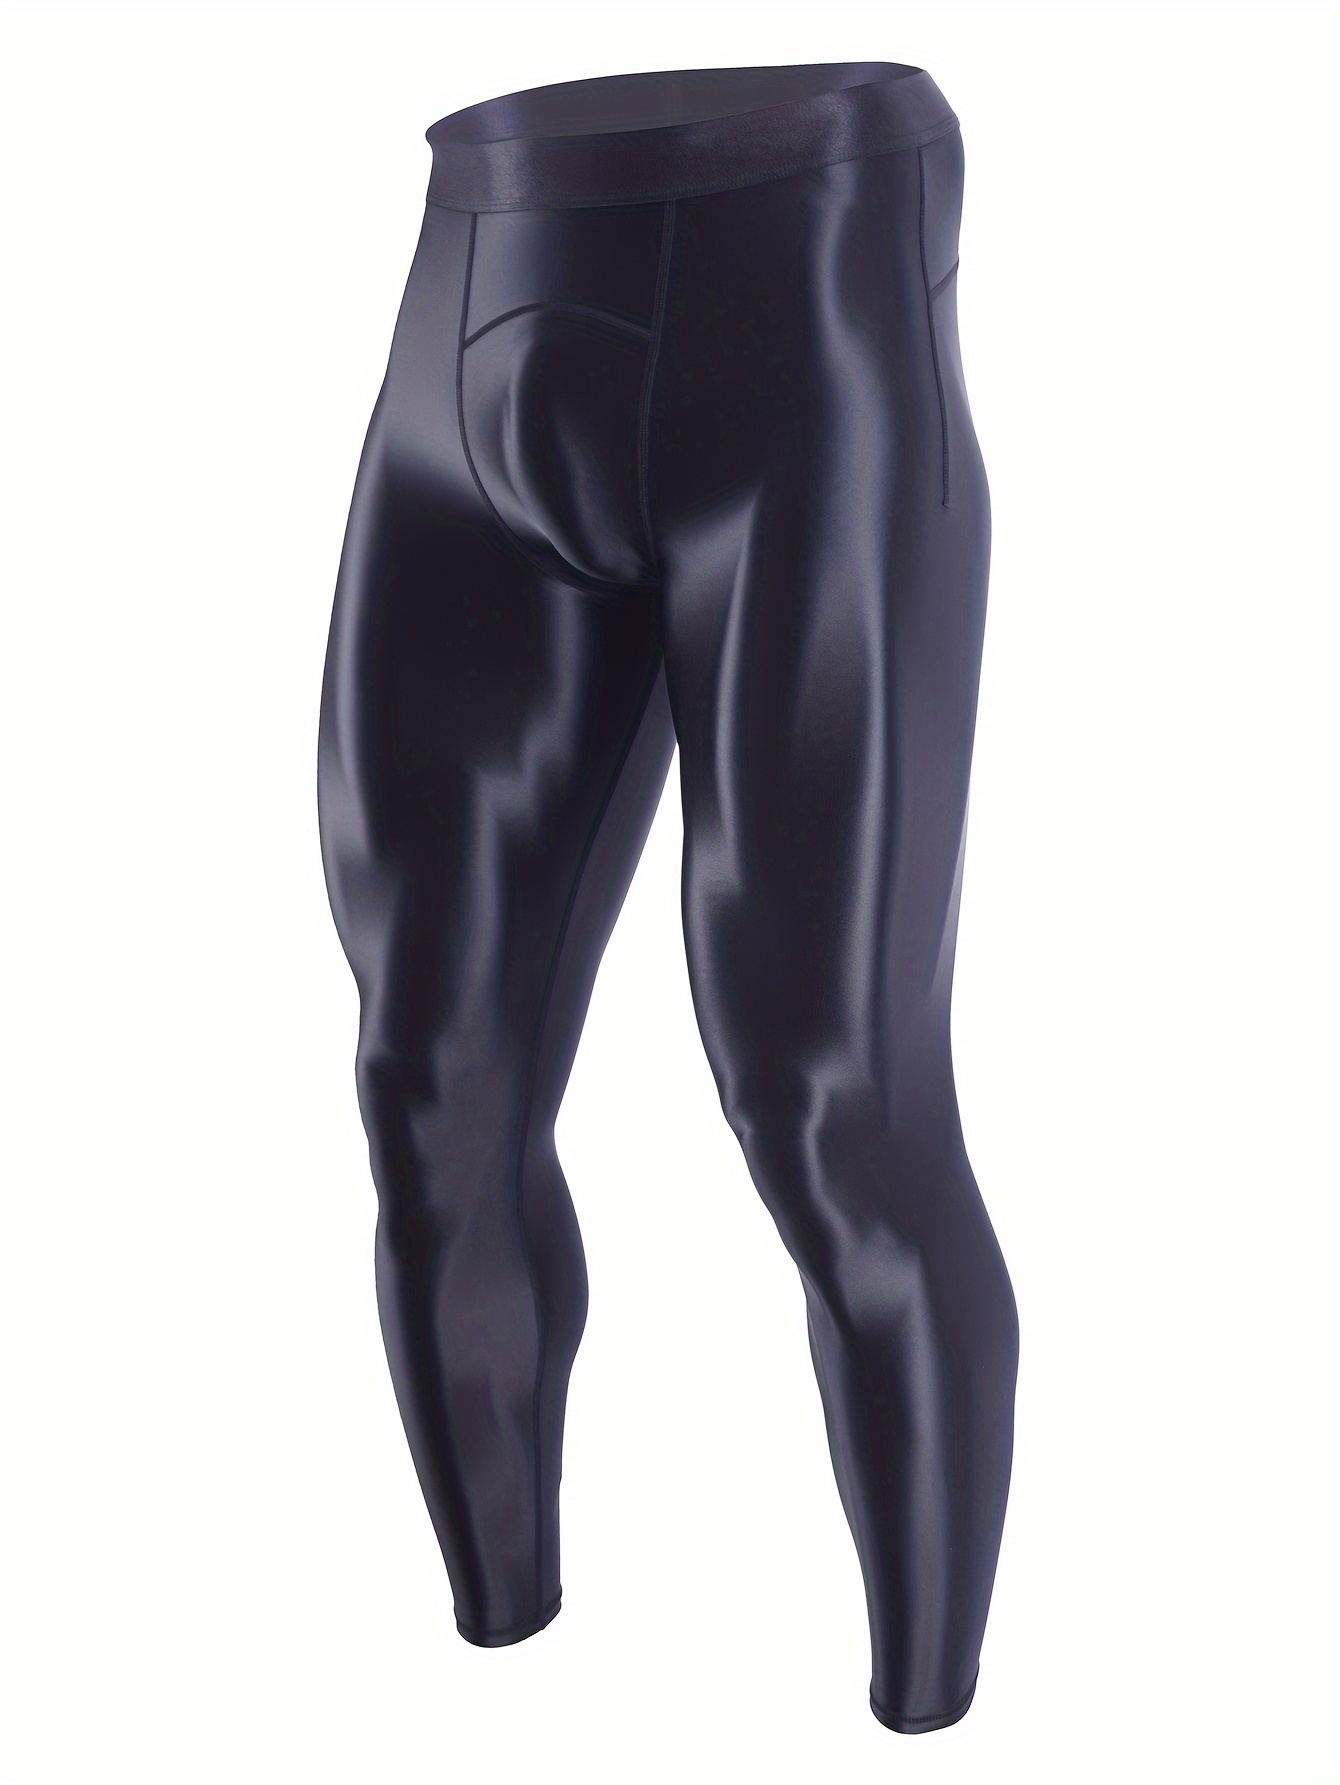 Men's Spandex Leggings Fitness Pants Stretch Low Waist Shiny Tight Gym Wear  Slim 